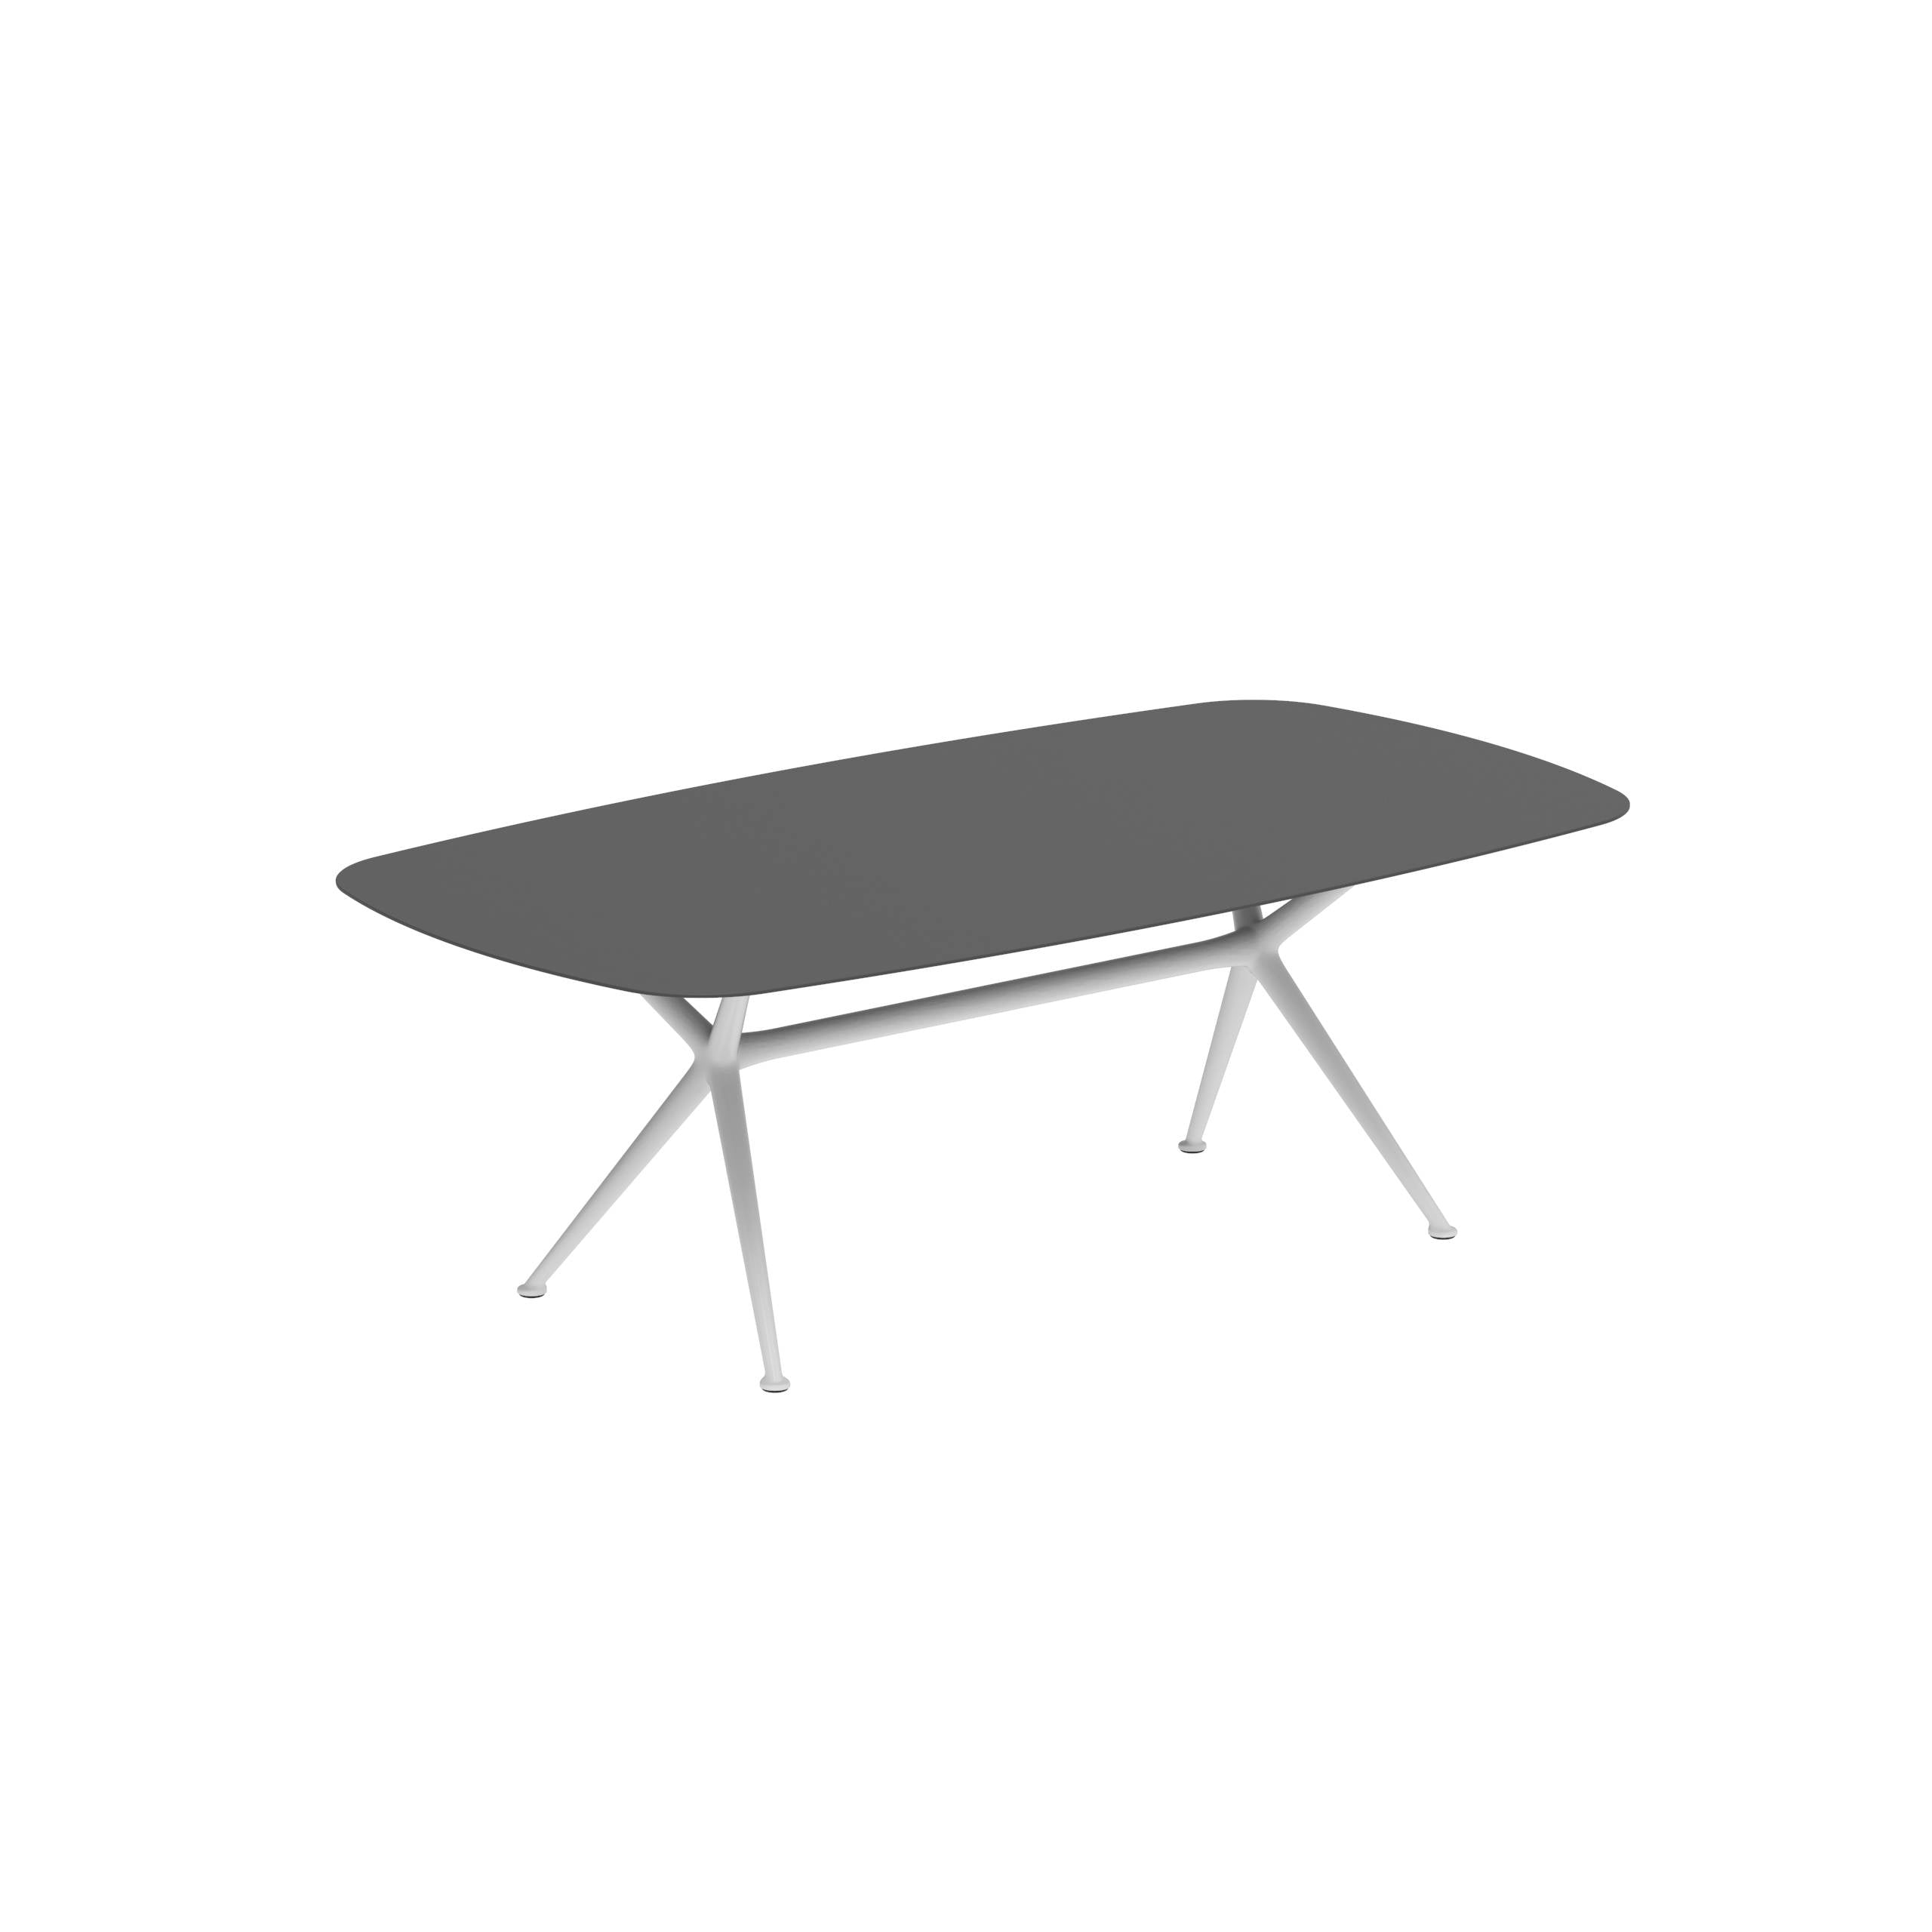 Exes Table 220x120cm Alu Legs White - Table Top Ceramic Black